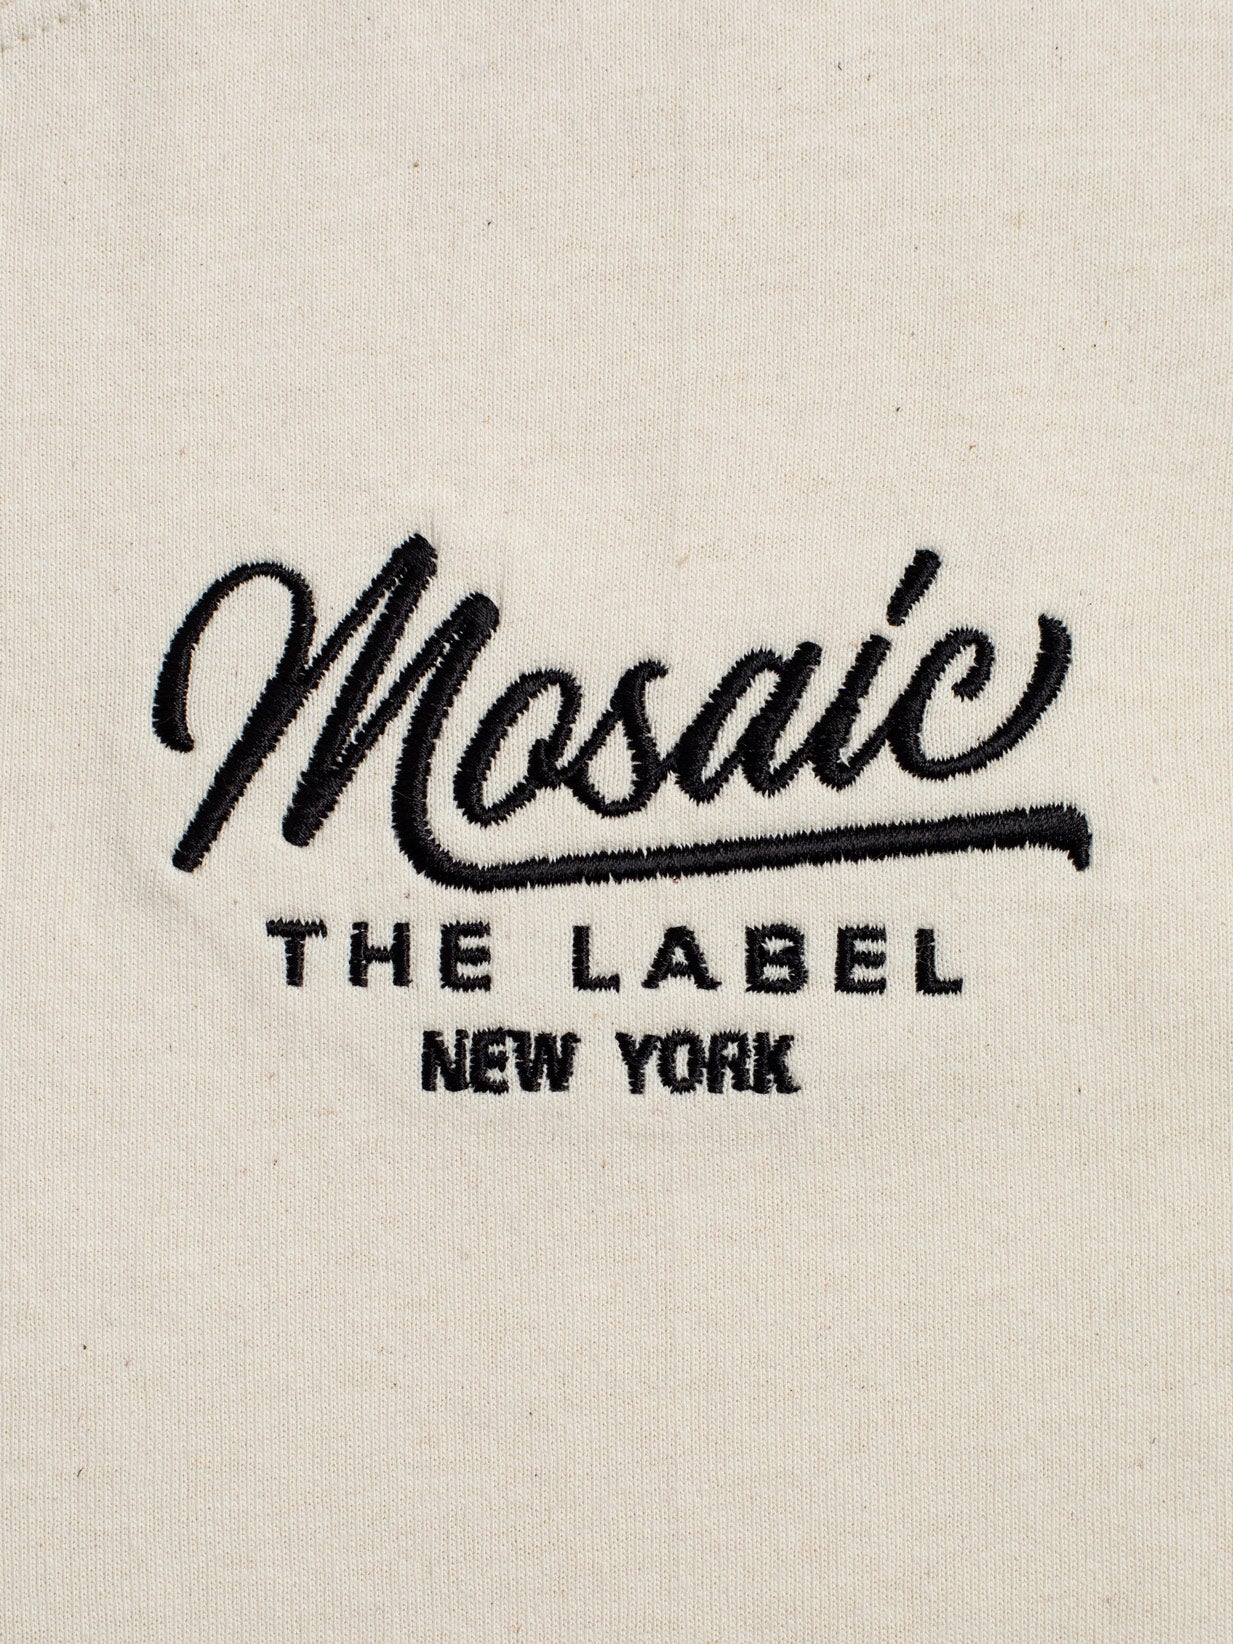 Kids Mosaic the Label Logo T-Shirt - Mosaic the Label